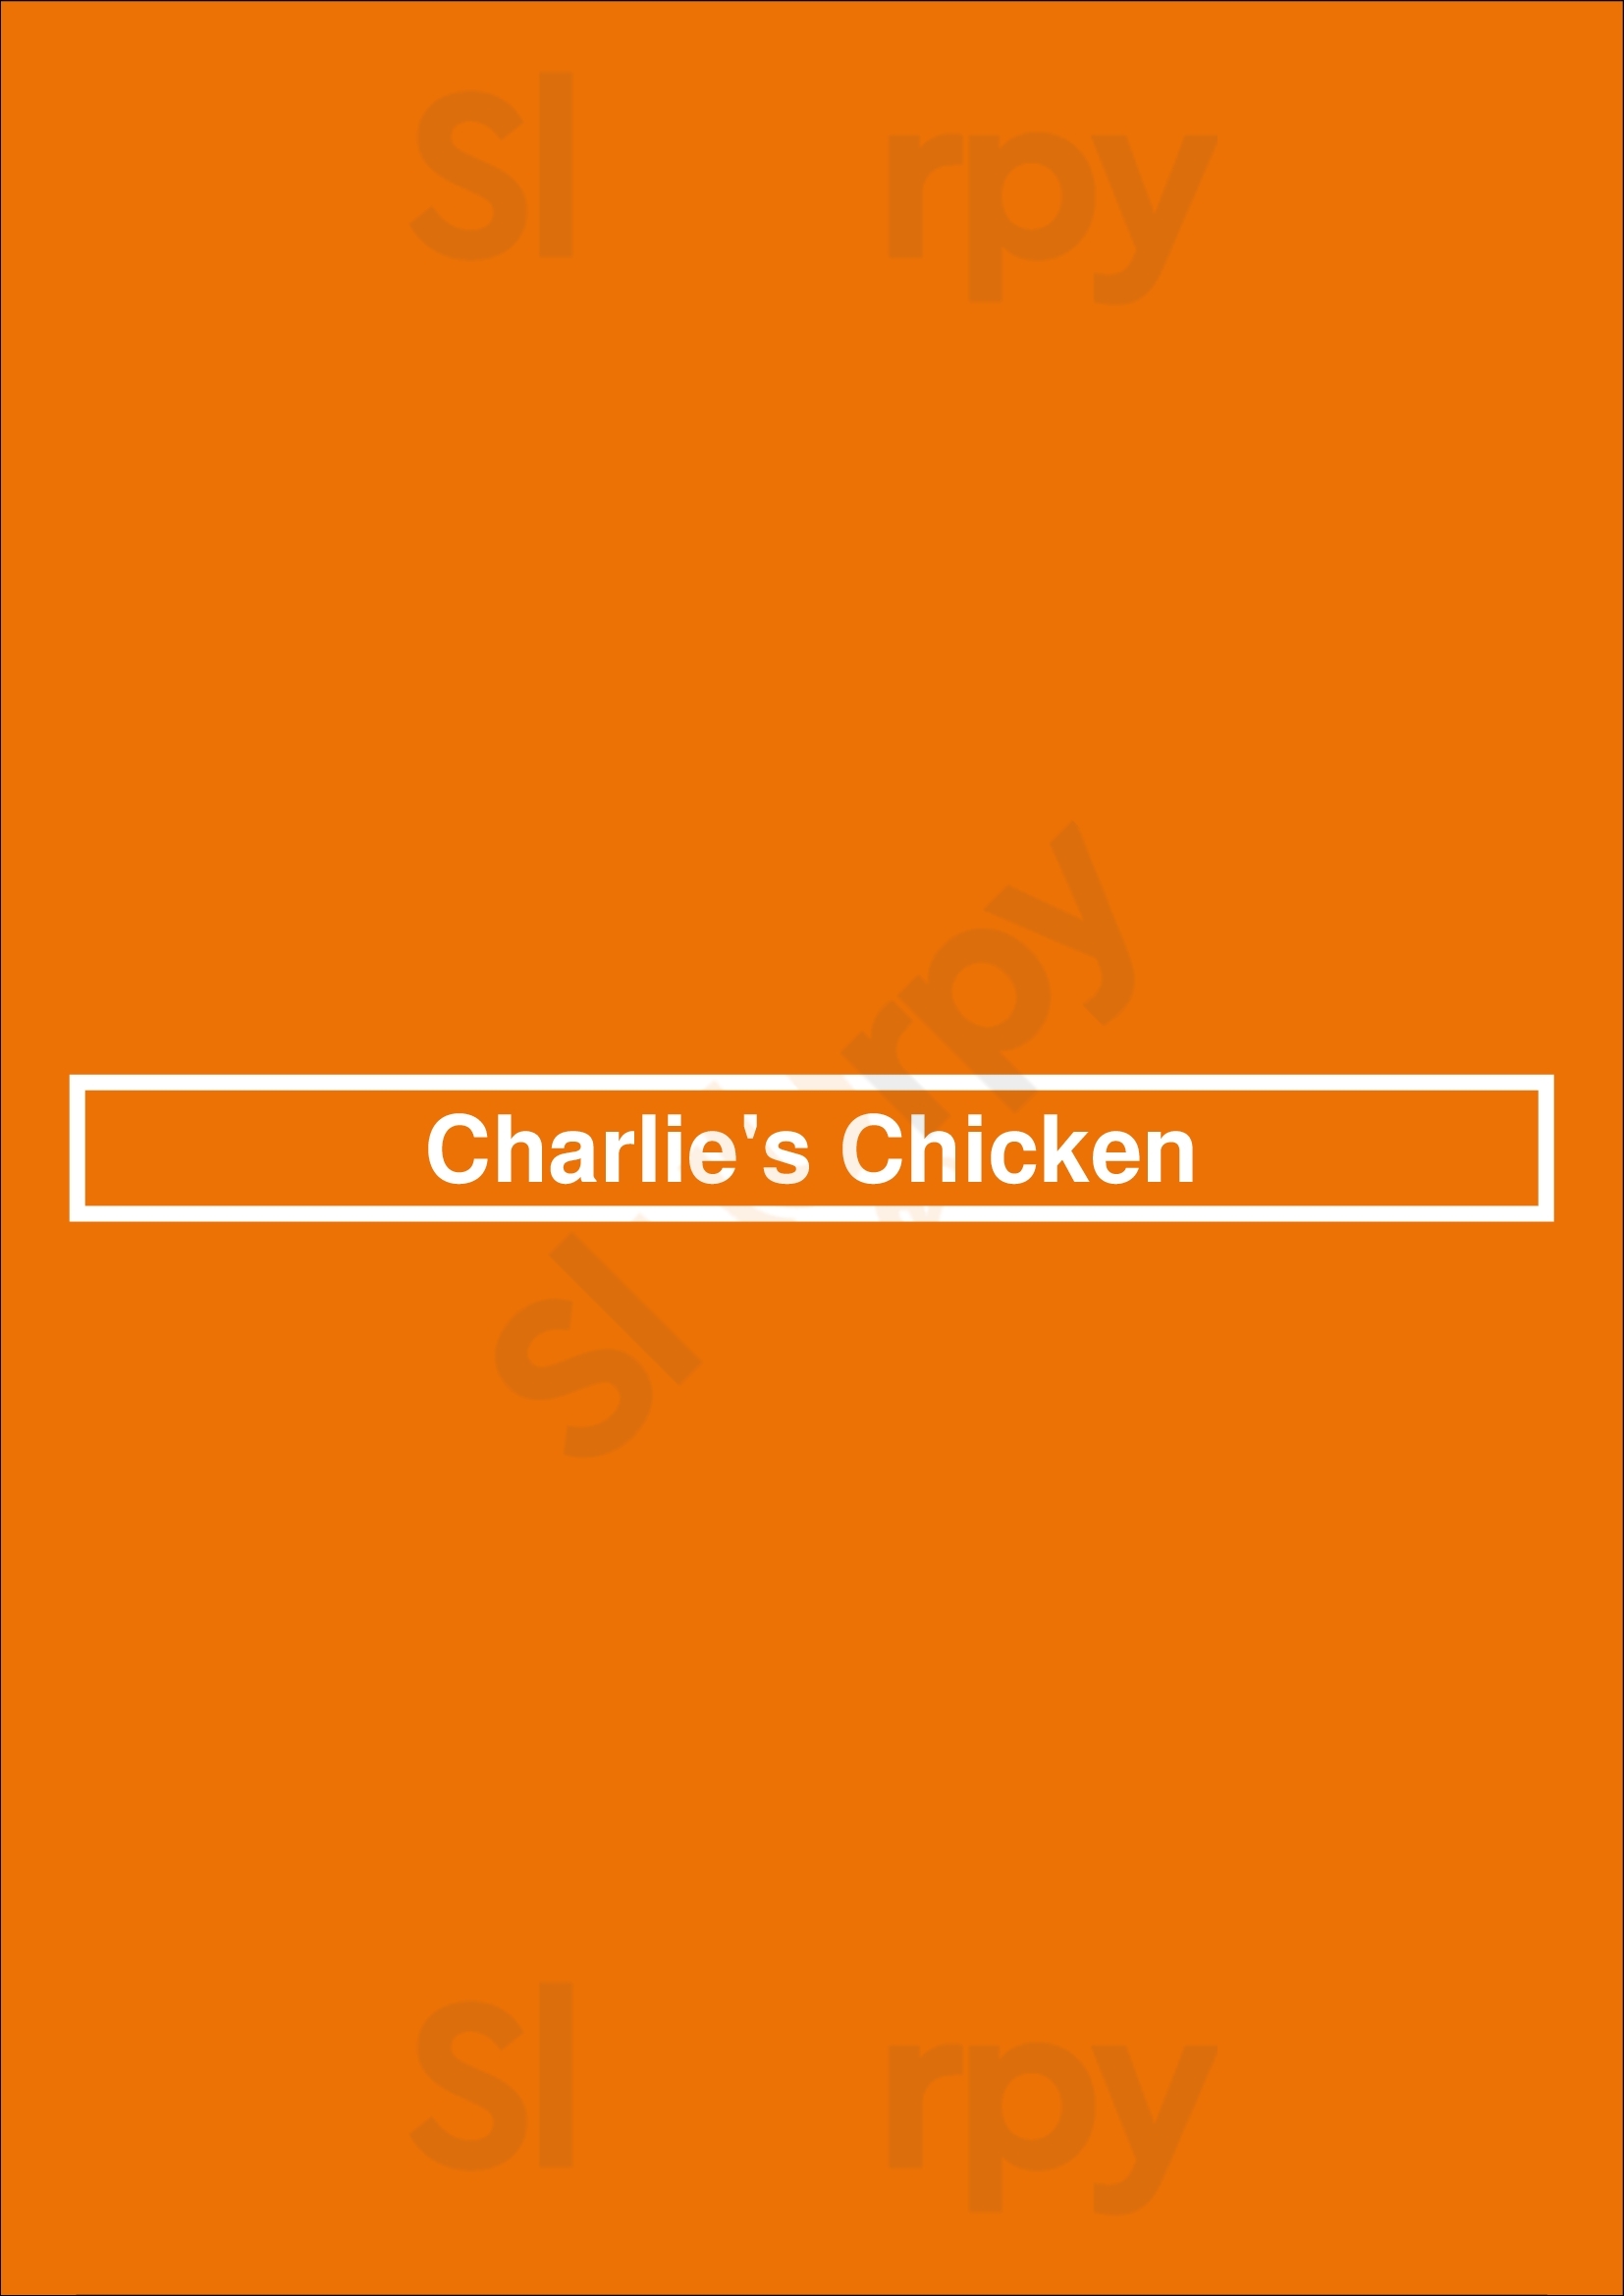 Charlie's Chicken Broken Arrow Menu - 1